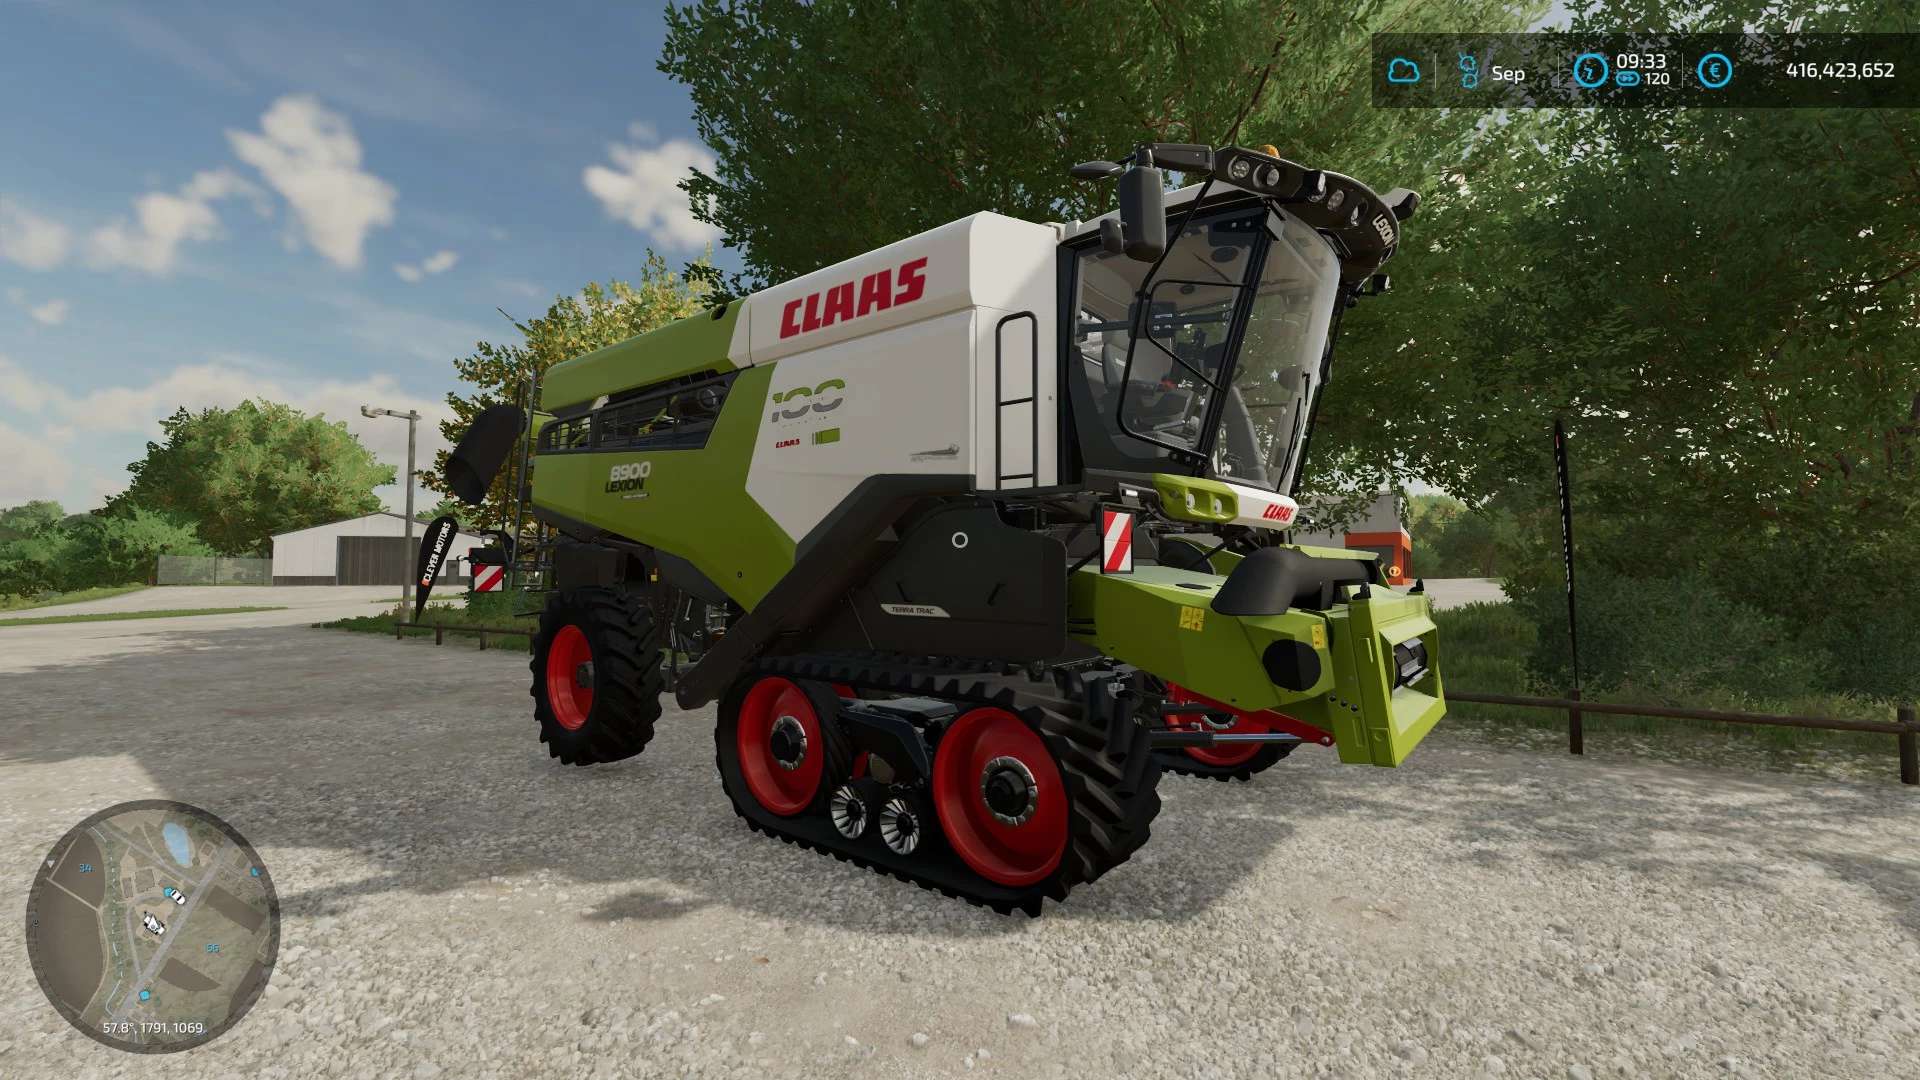 Claas Lexion 8900 V10 Fs22 Farming Simulator 22 Mod Fs22 Mod Images And Photos Finder 6994